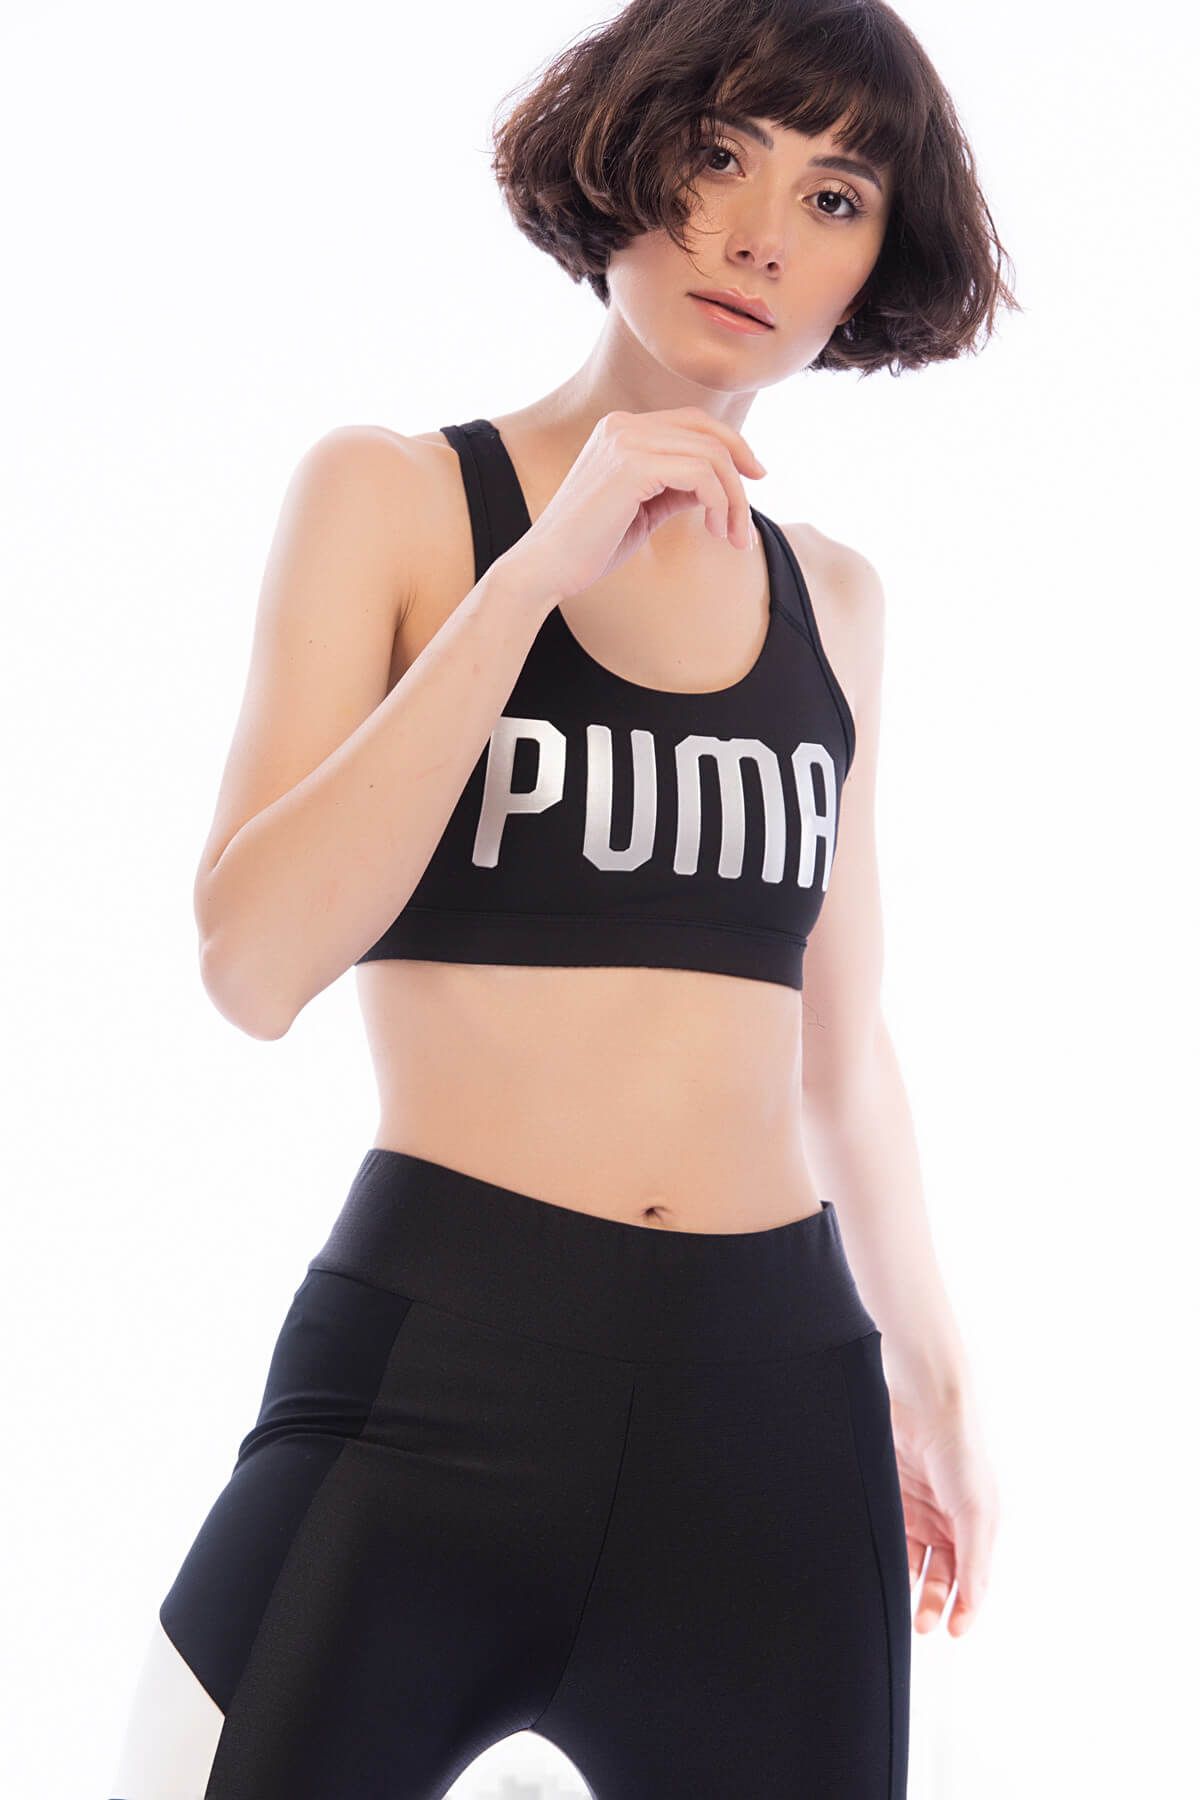 Puma PWRSHAPE FOREVER - LOGO Siyah Kadın Sporcu Sütyeni 100397302